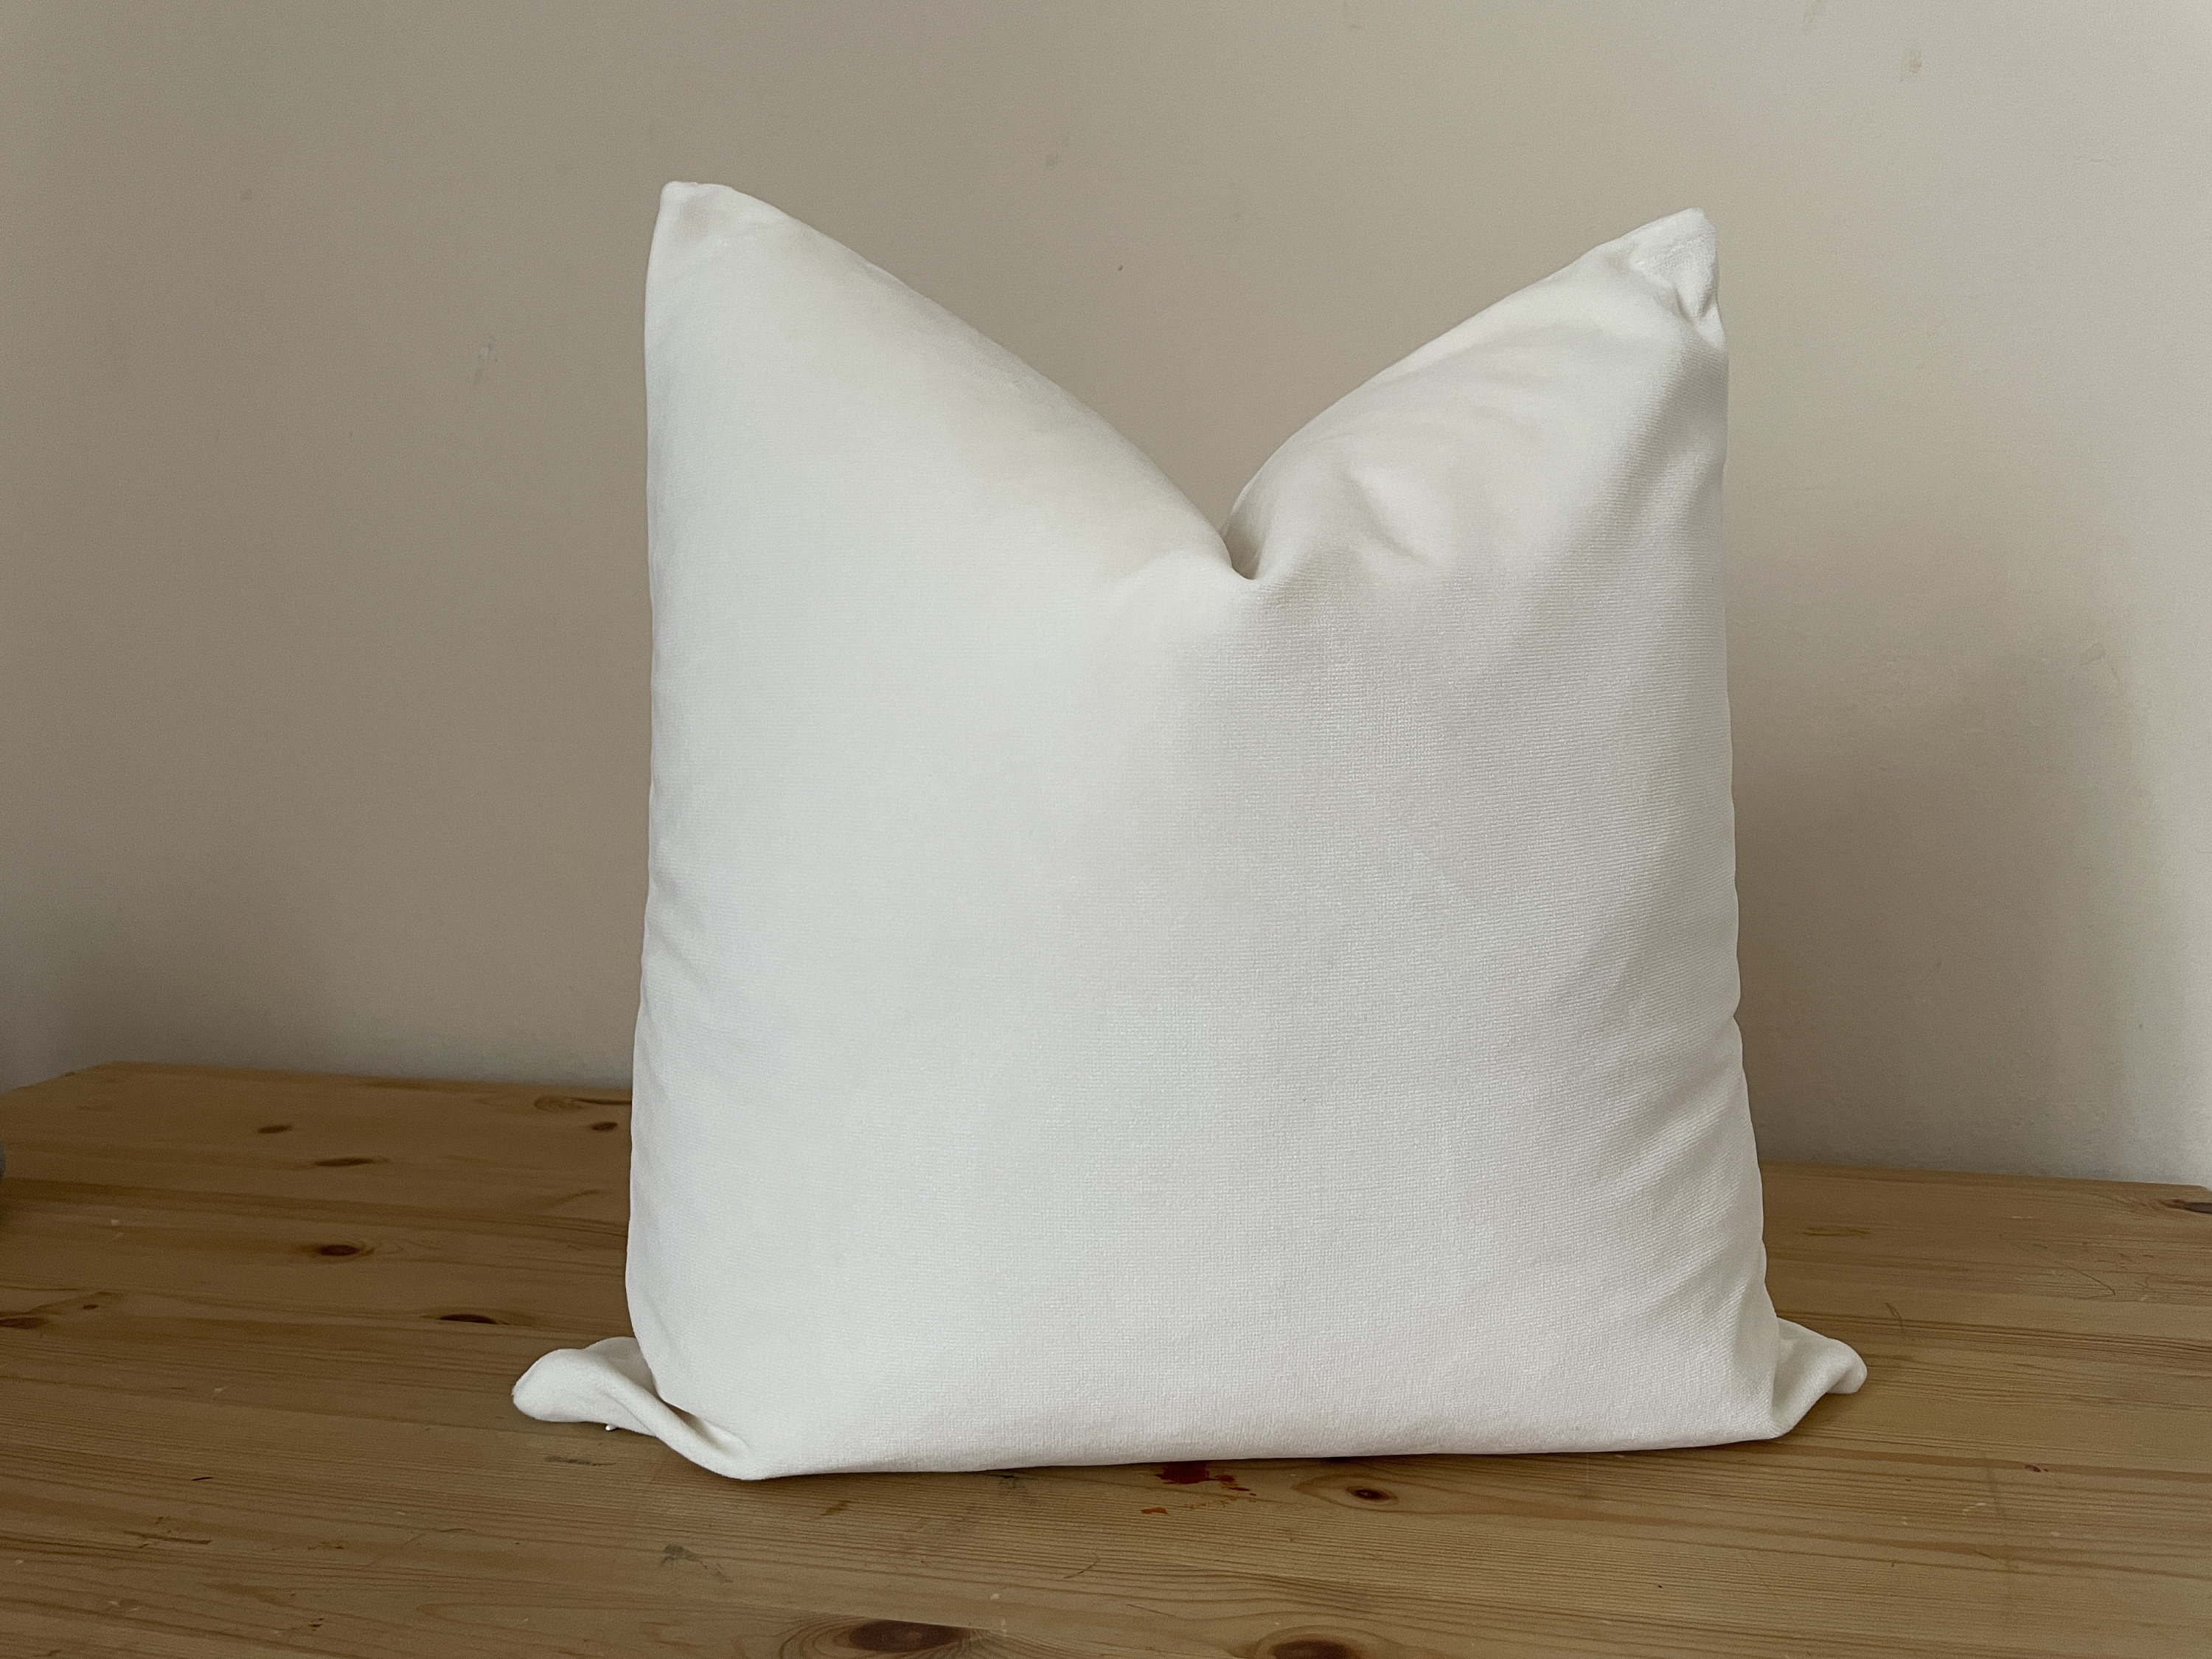  ReynosoHomeDecor 18x24 Pillow Insert Form : Home & Kitchen